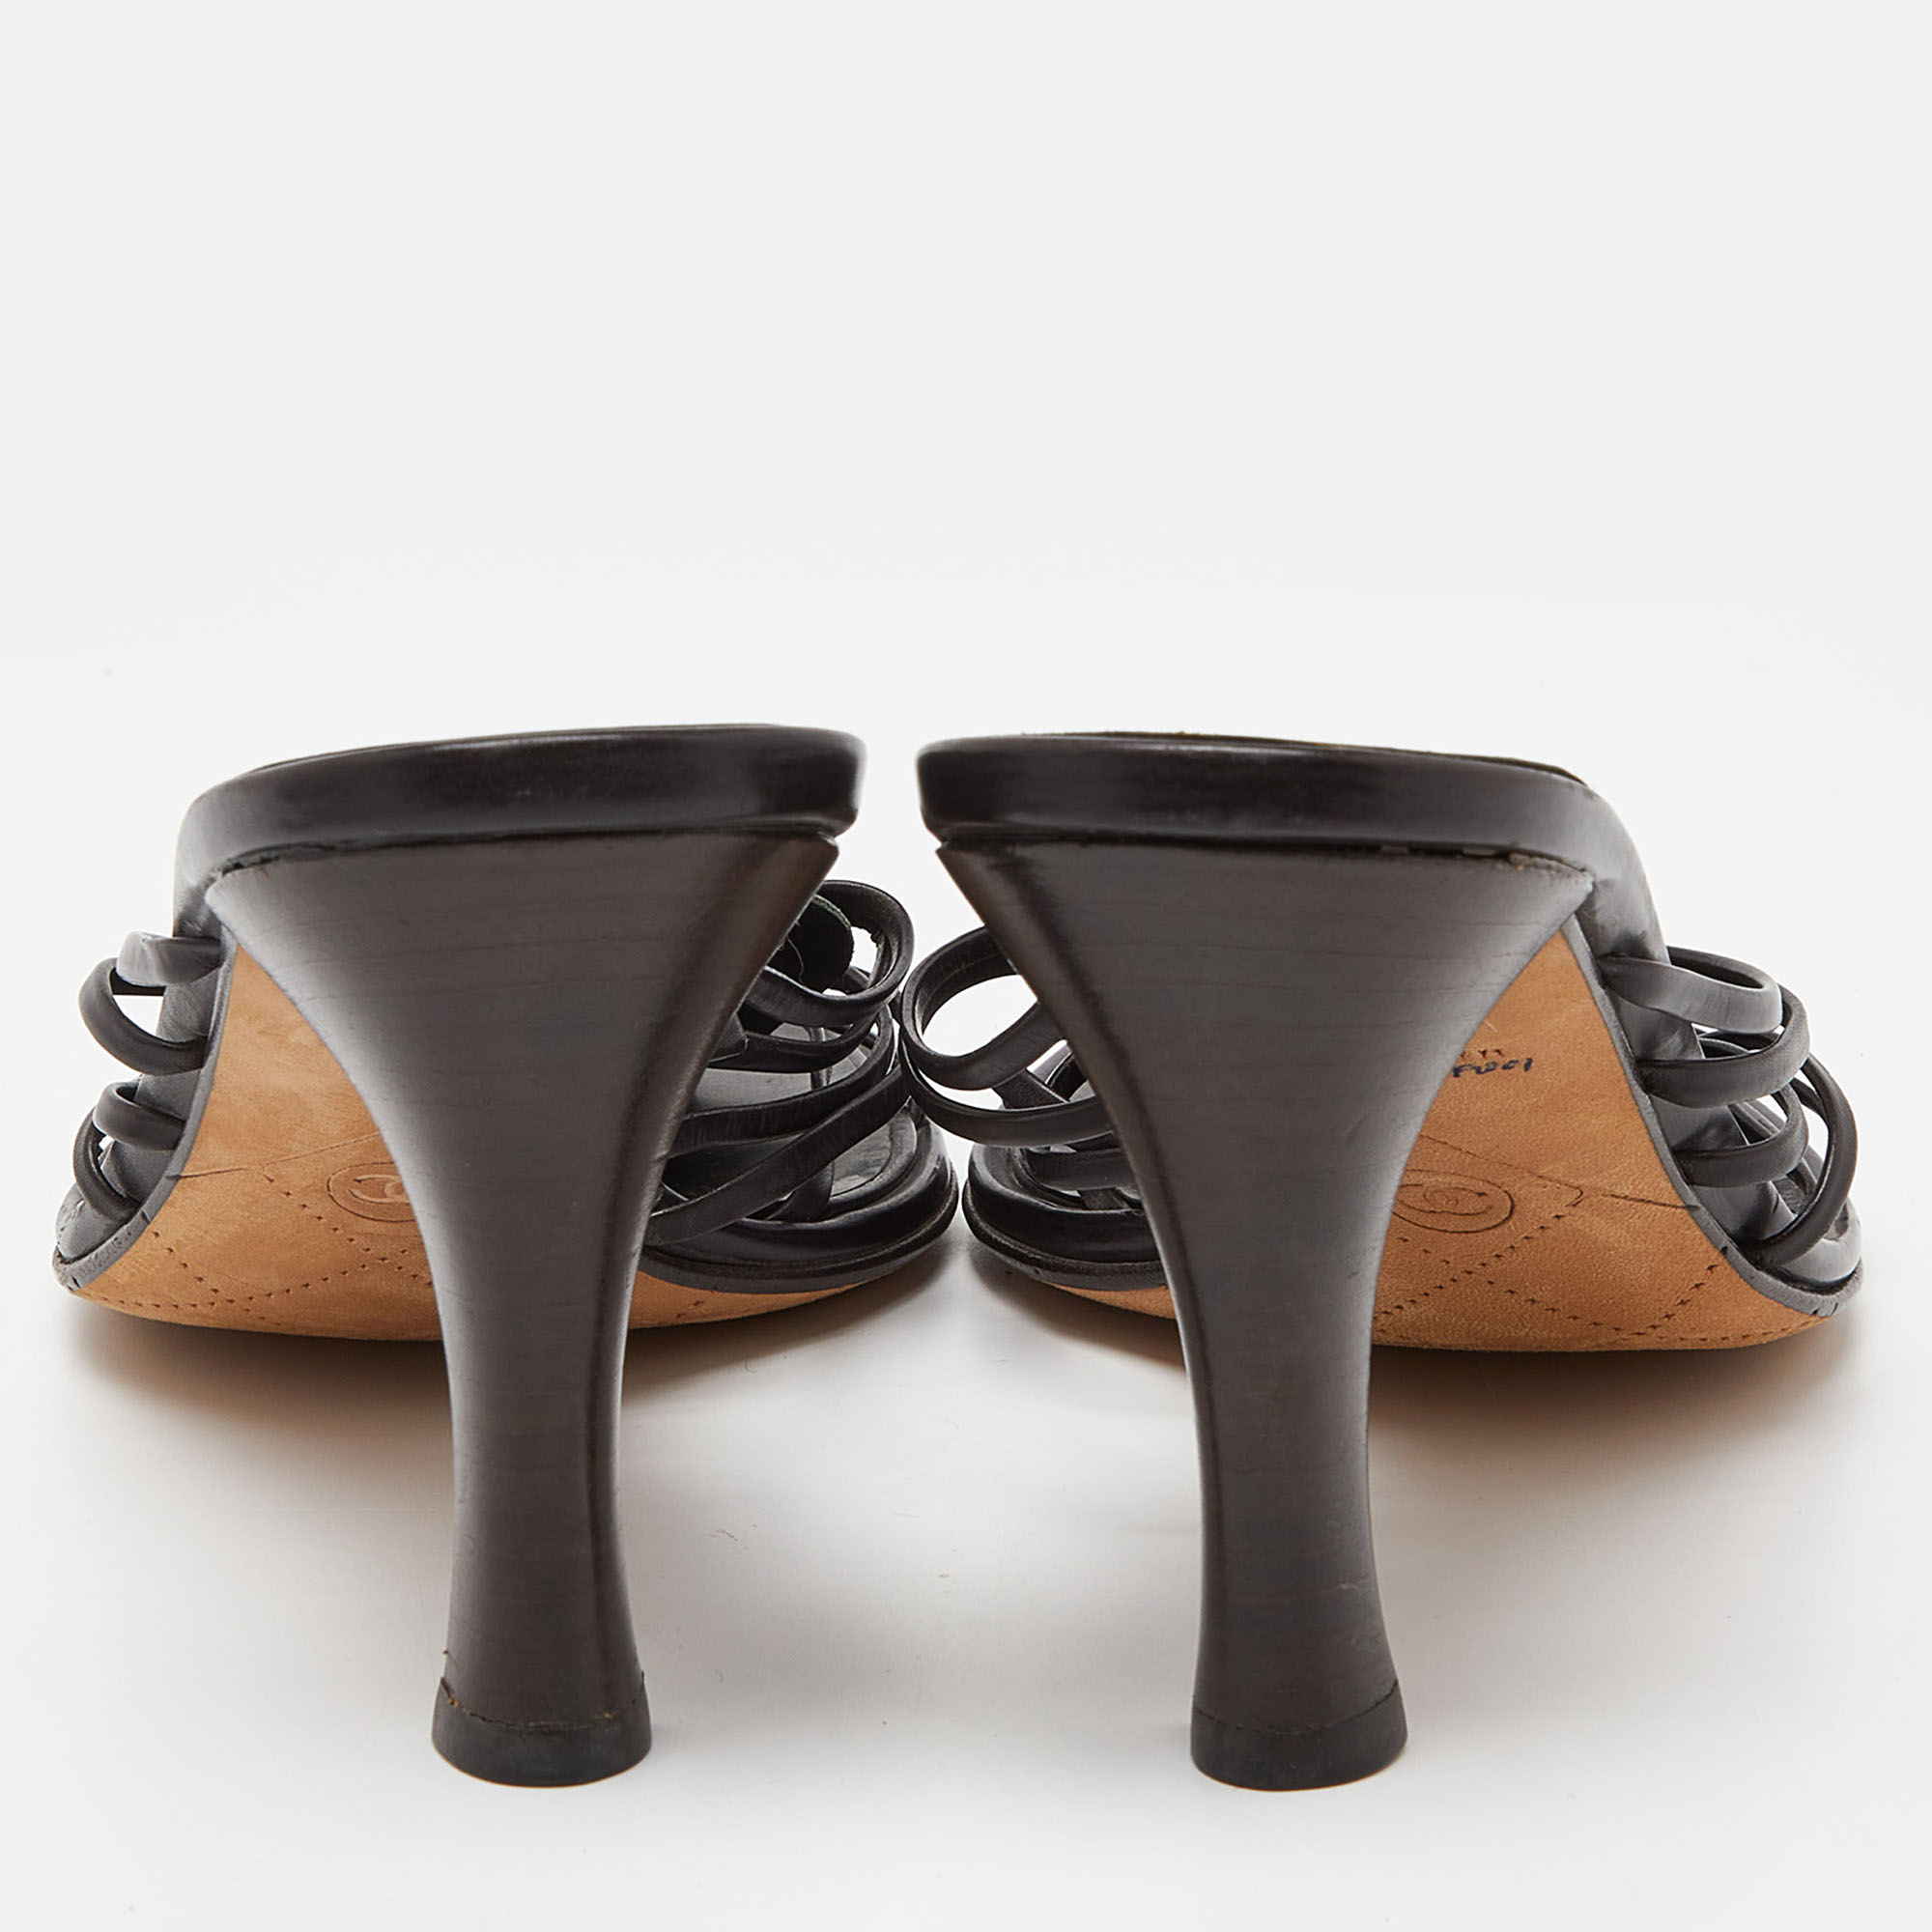 Chanel Black Leather Strappy Slides Sandals Size 41